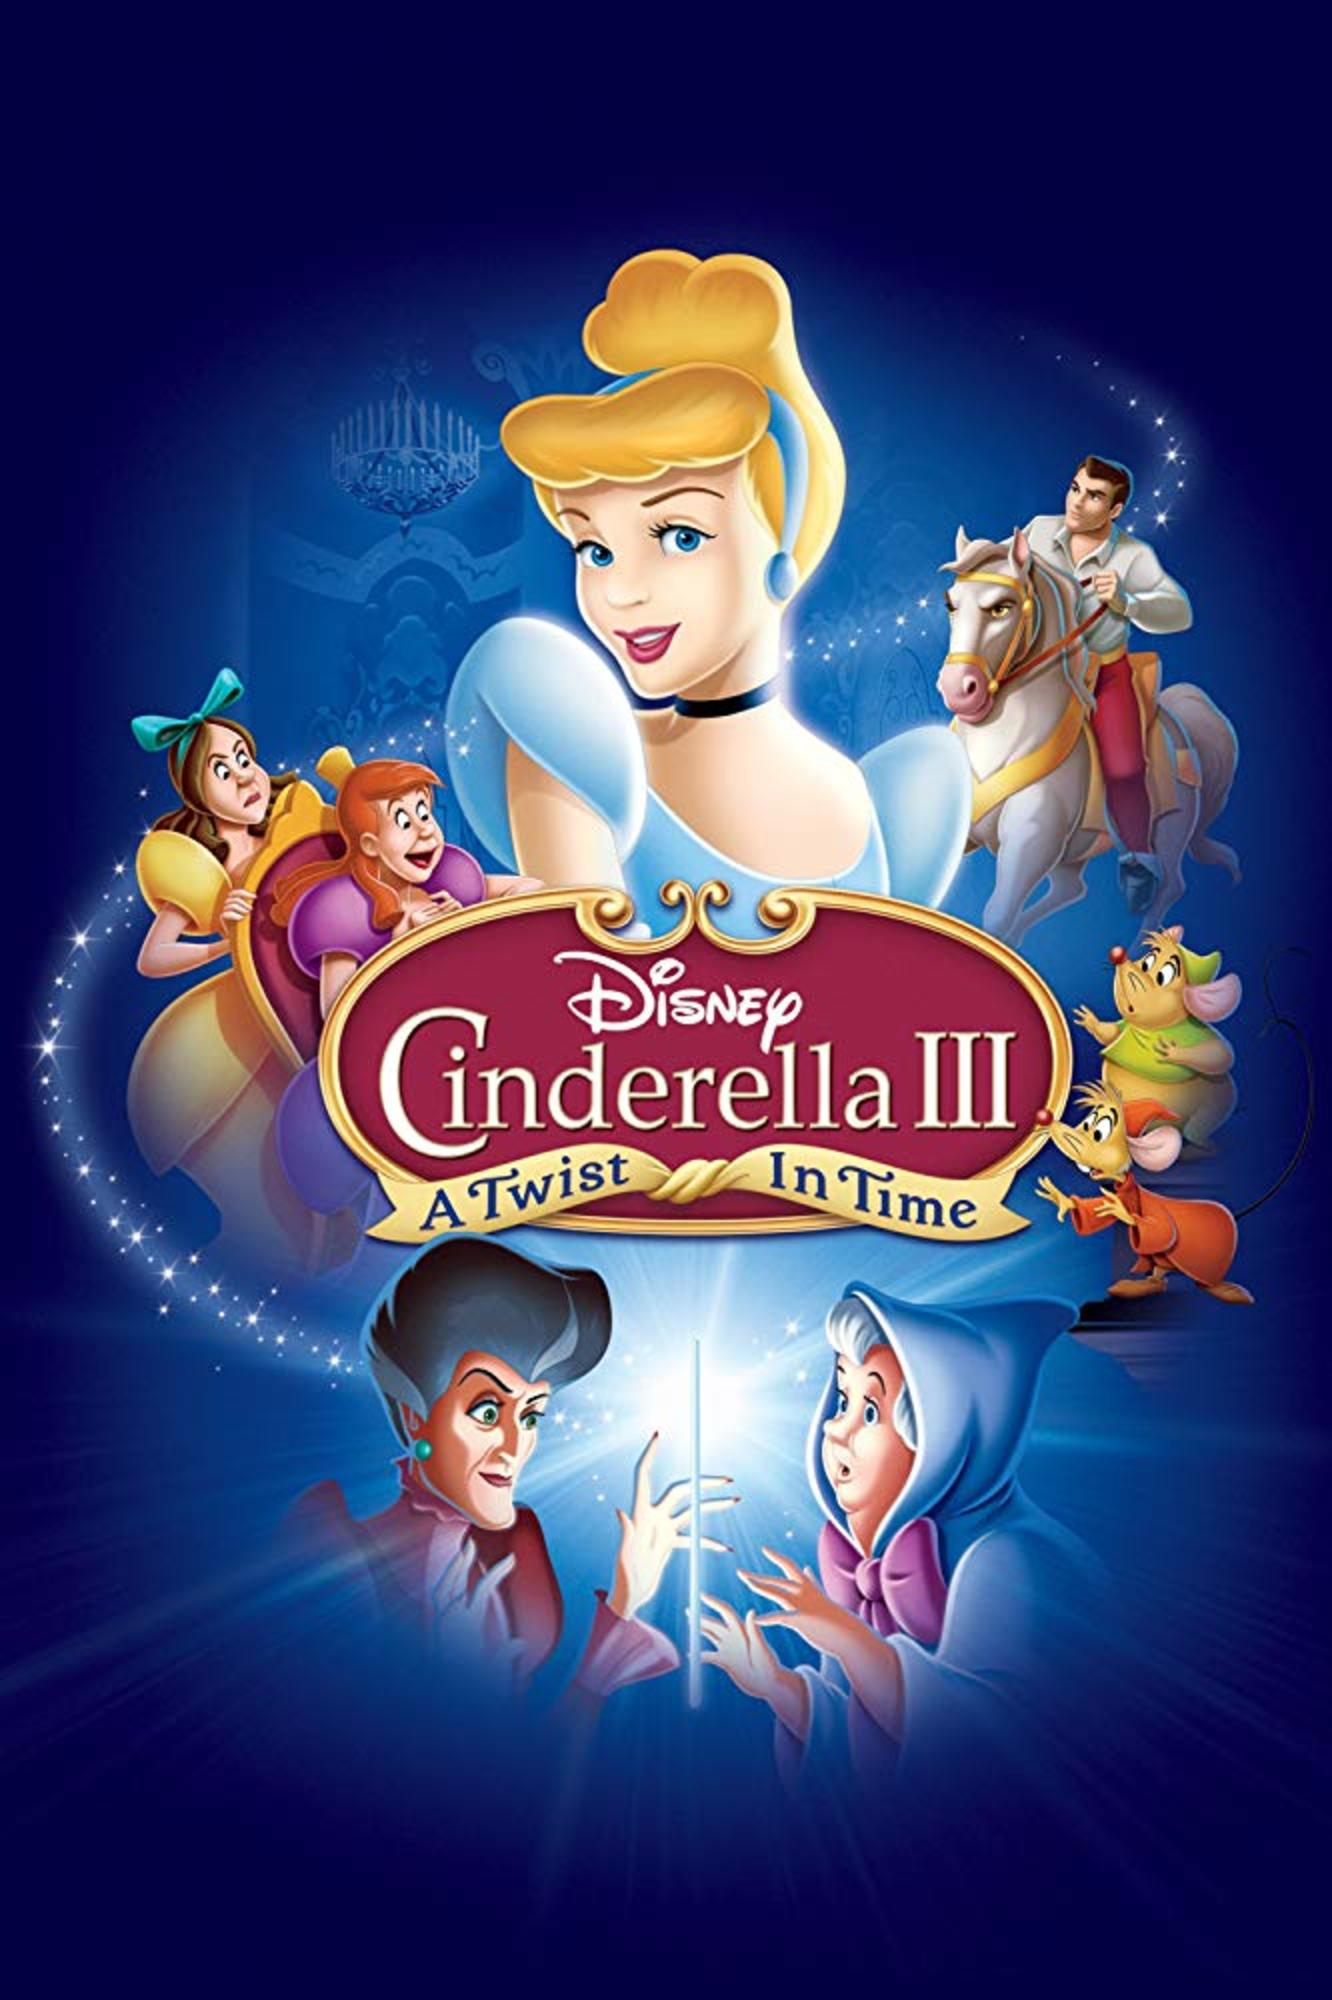 Le Sortilège De Cendrillon. | Critique | Disney-Planet concernant Cendrillon 3 Disney